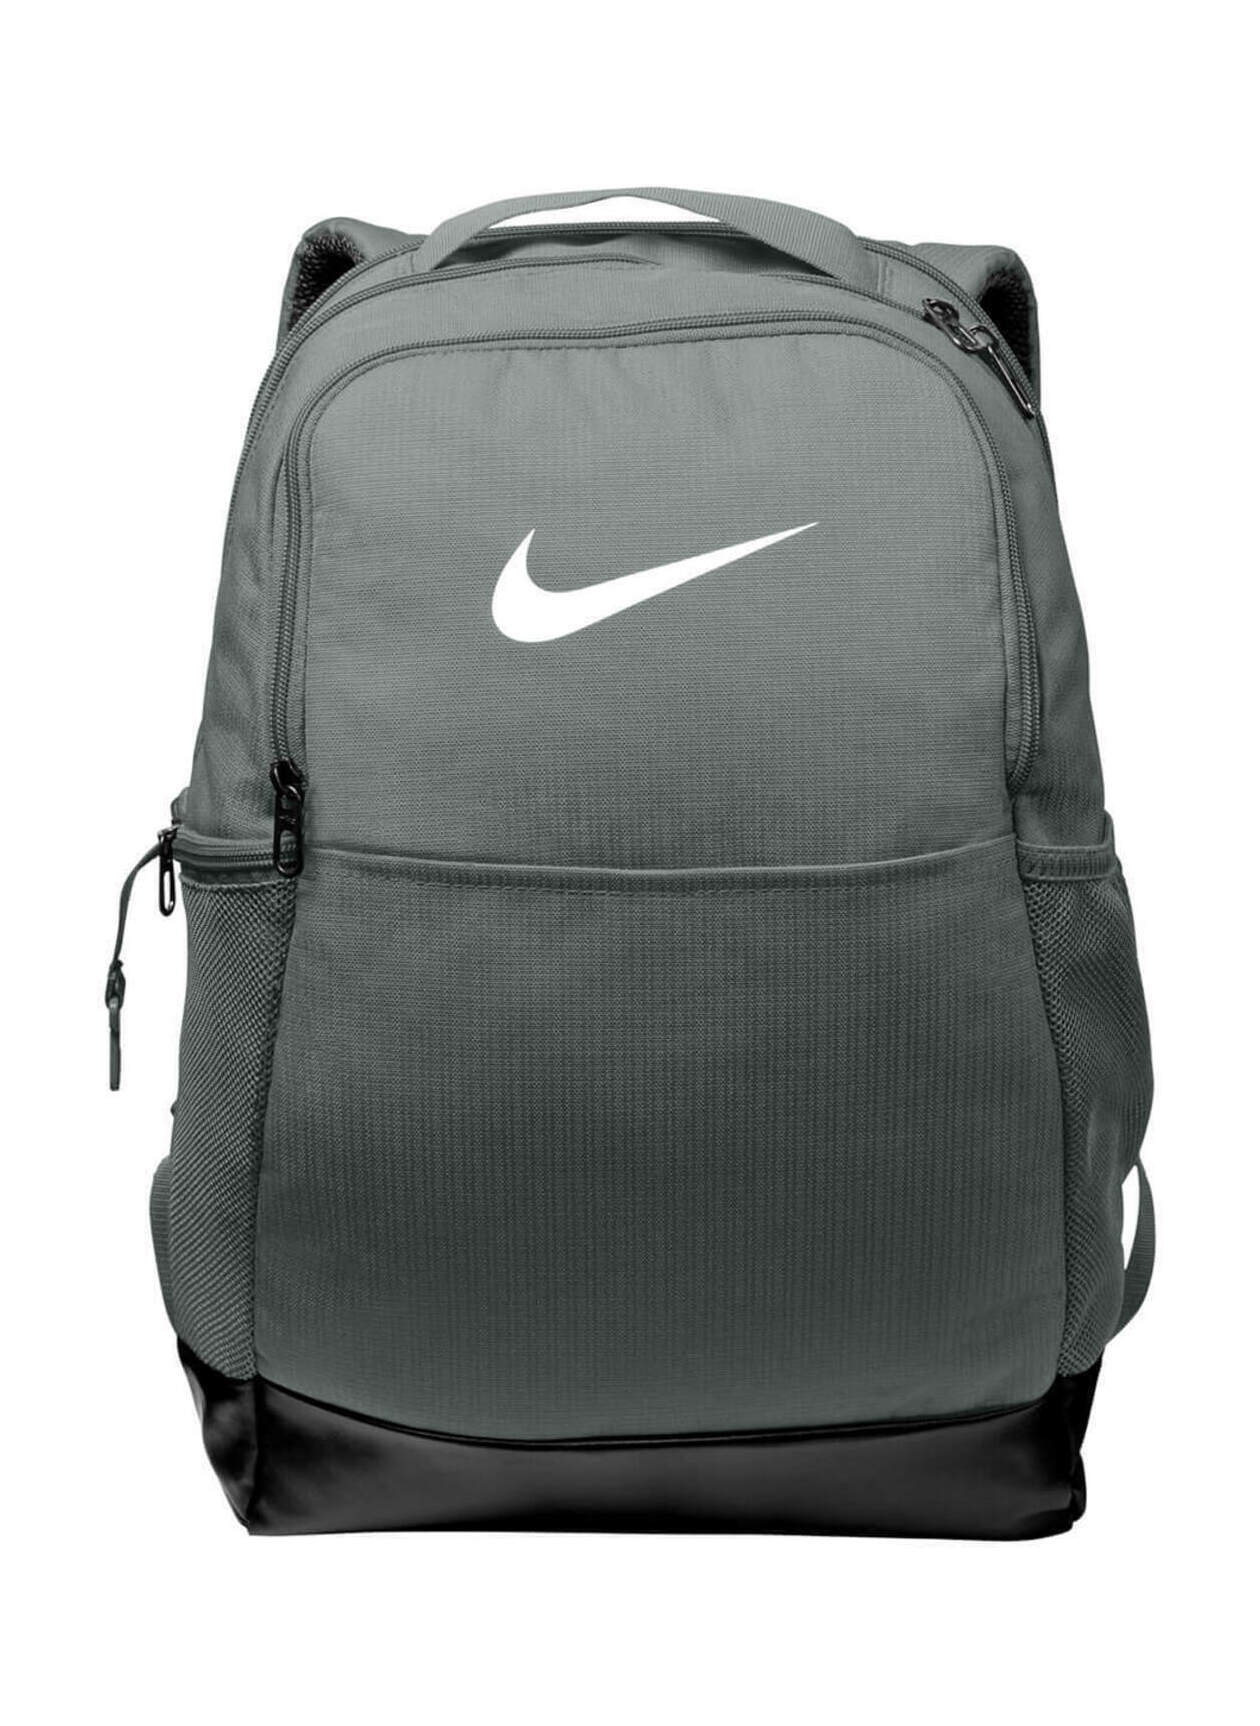 Nike Brasilia Medium Backpack Flint Grey | Nike